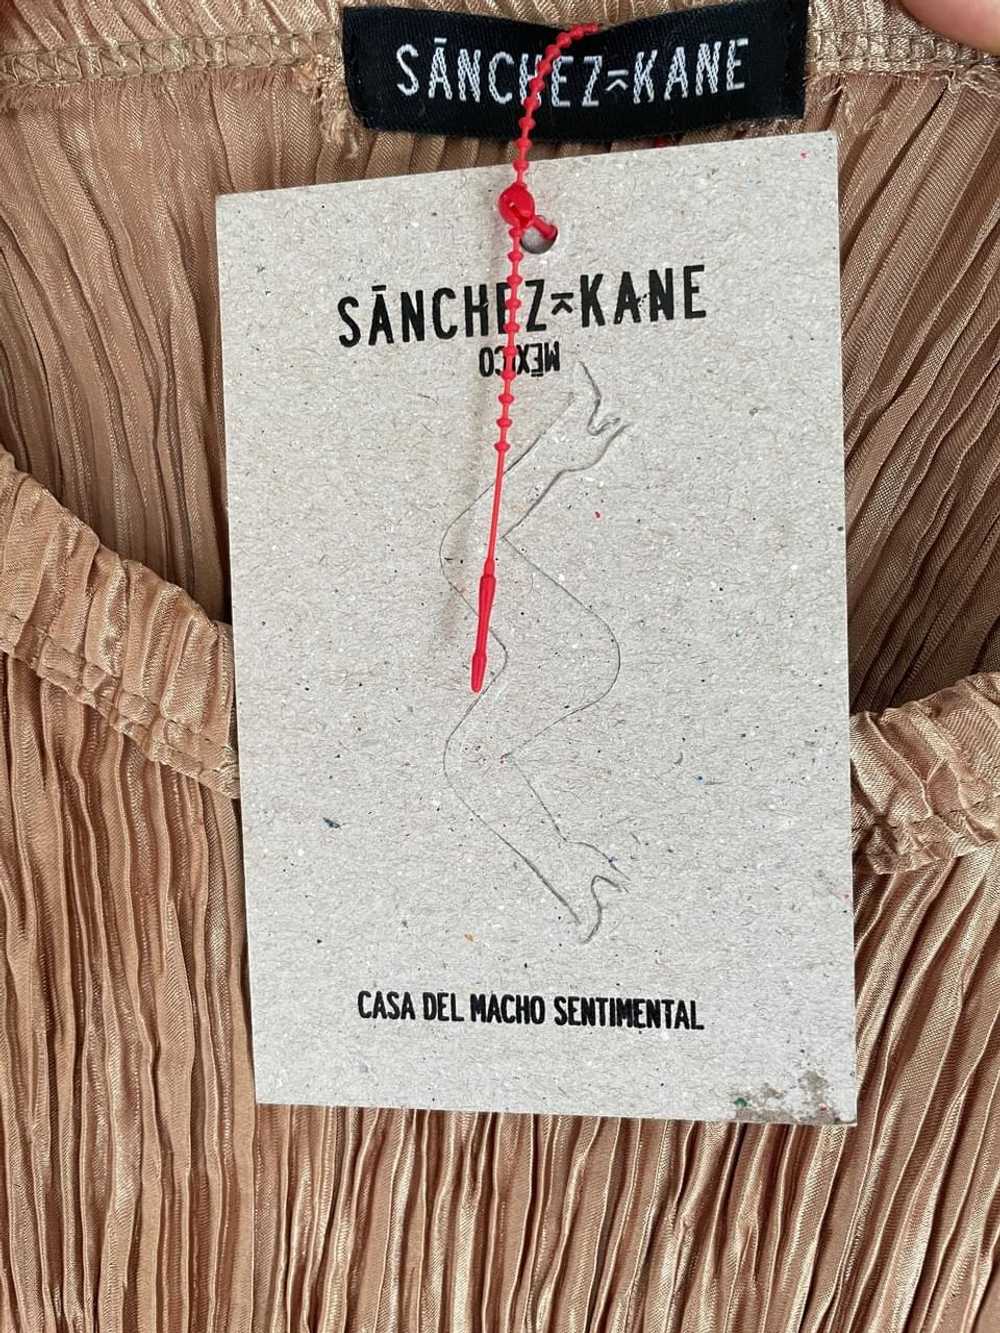 Sanchez-Kane Plisse Tank Top (one size) - image 4